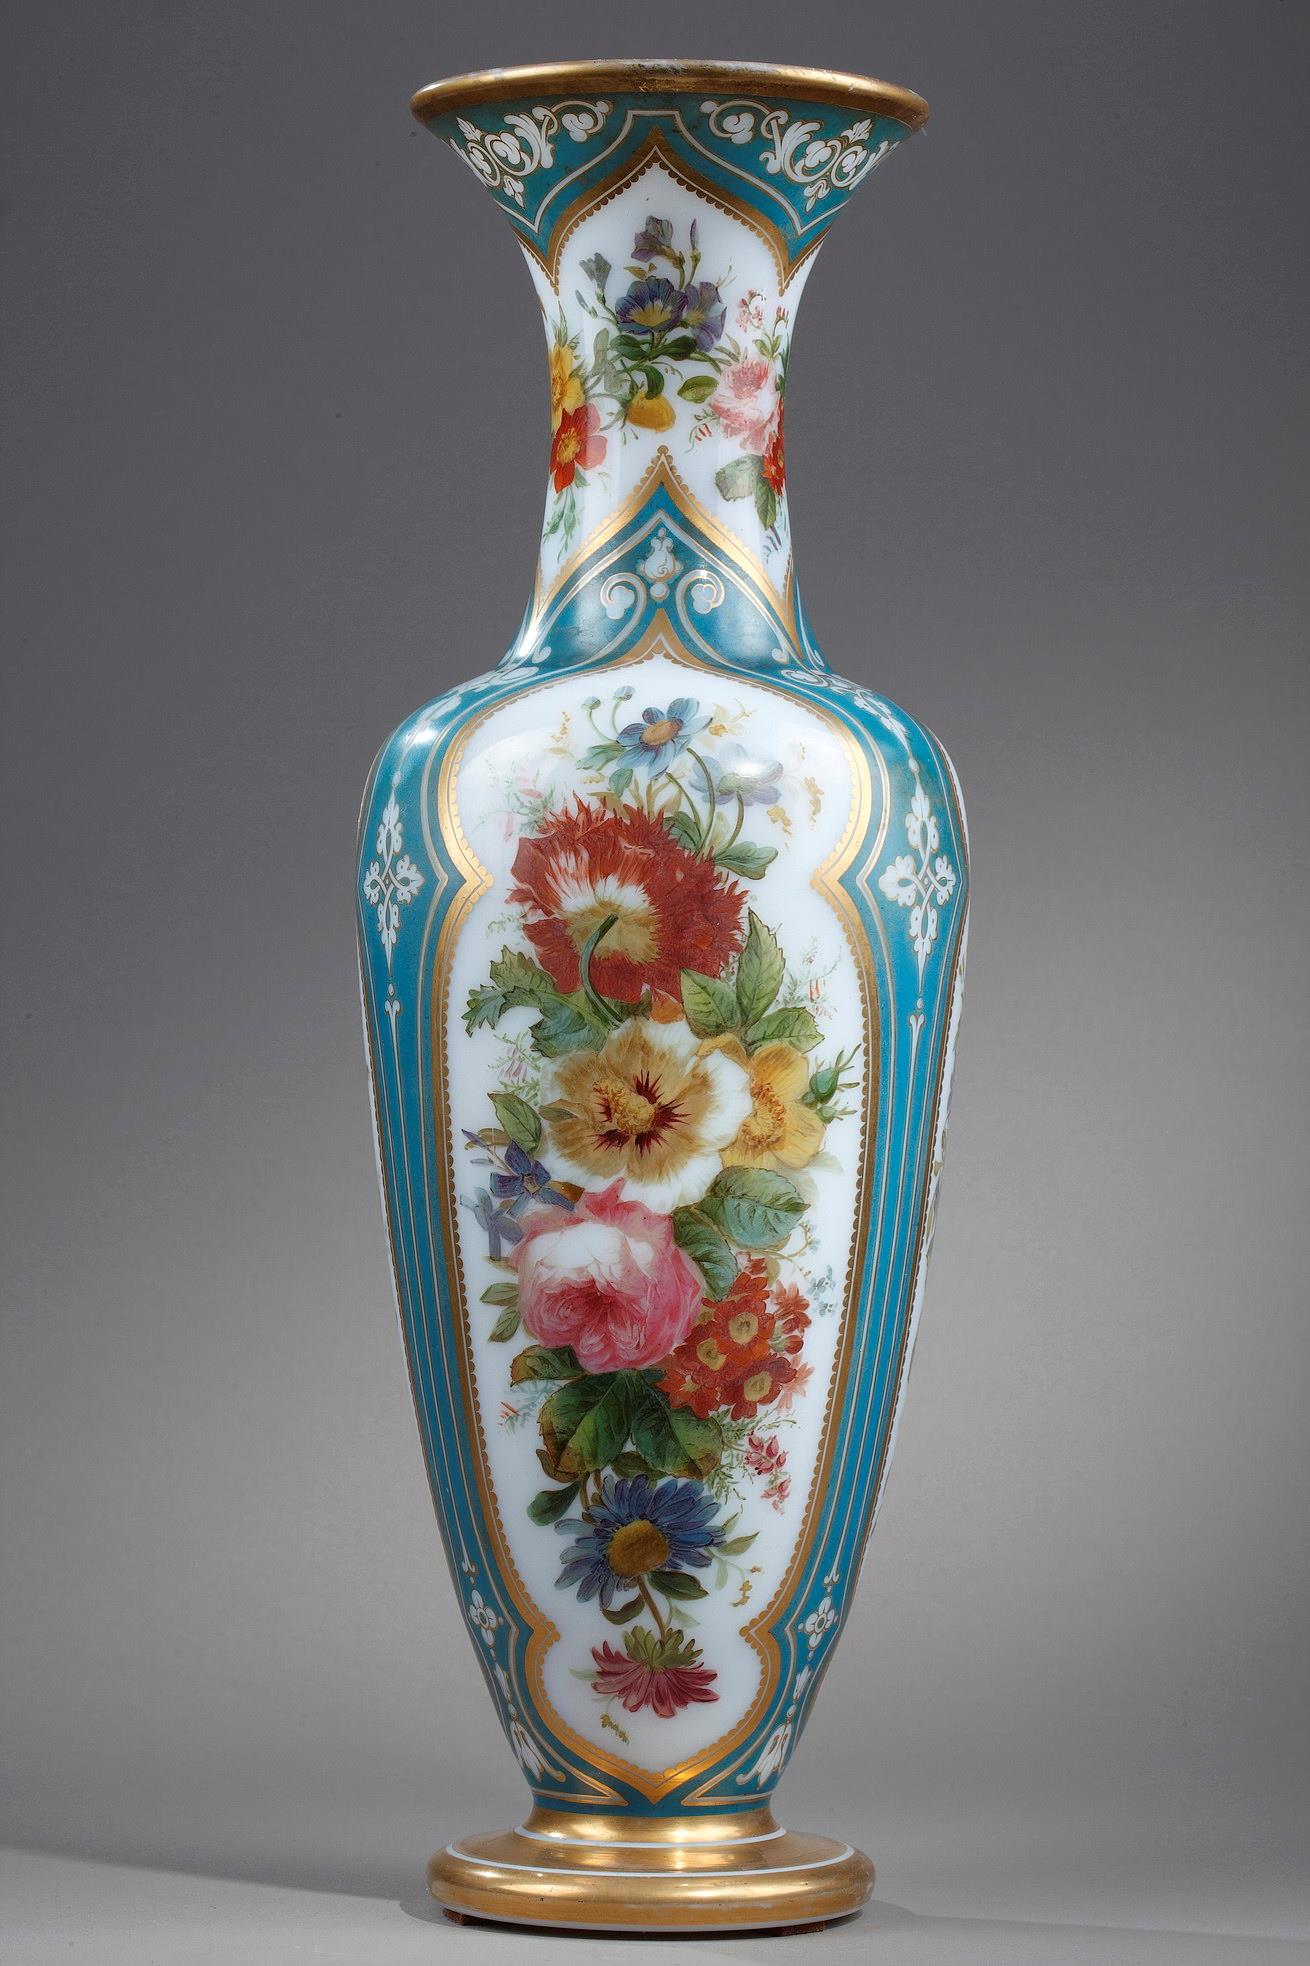 Mid-19th century French opaline vase.